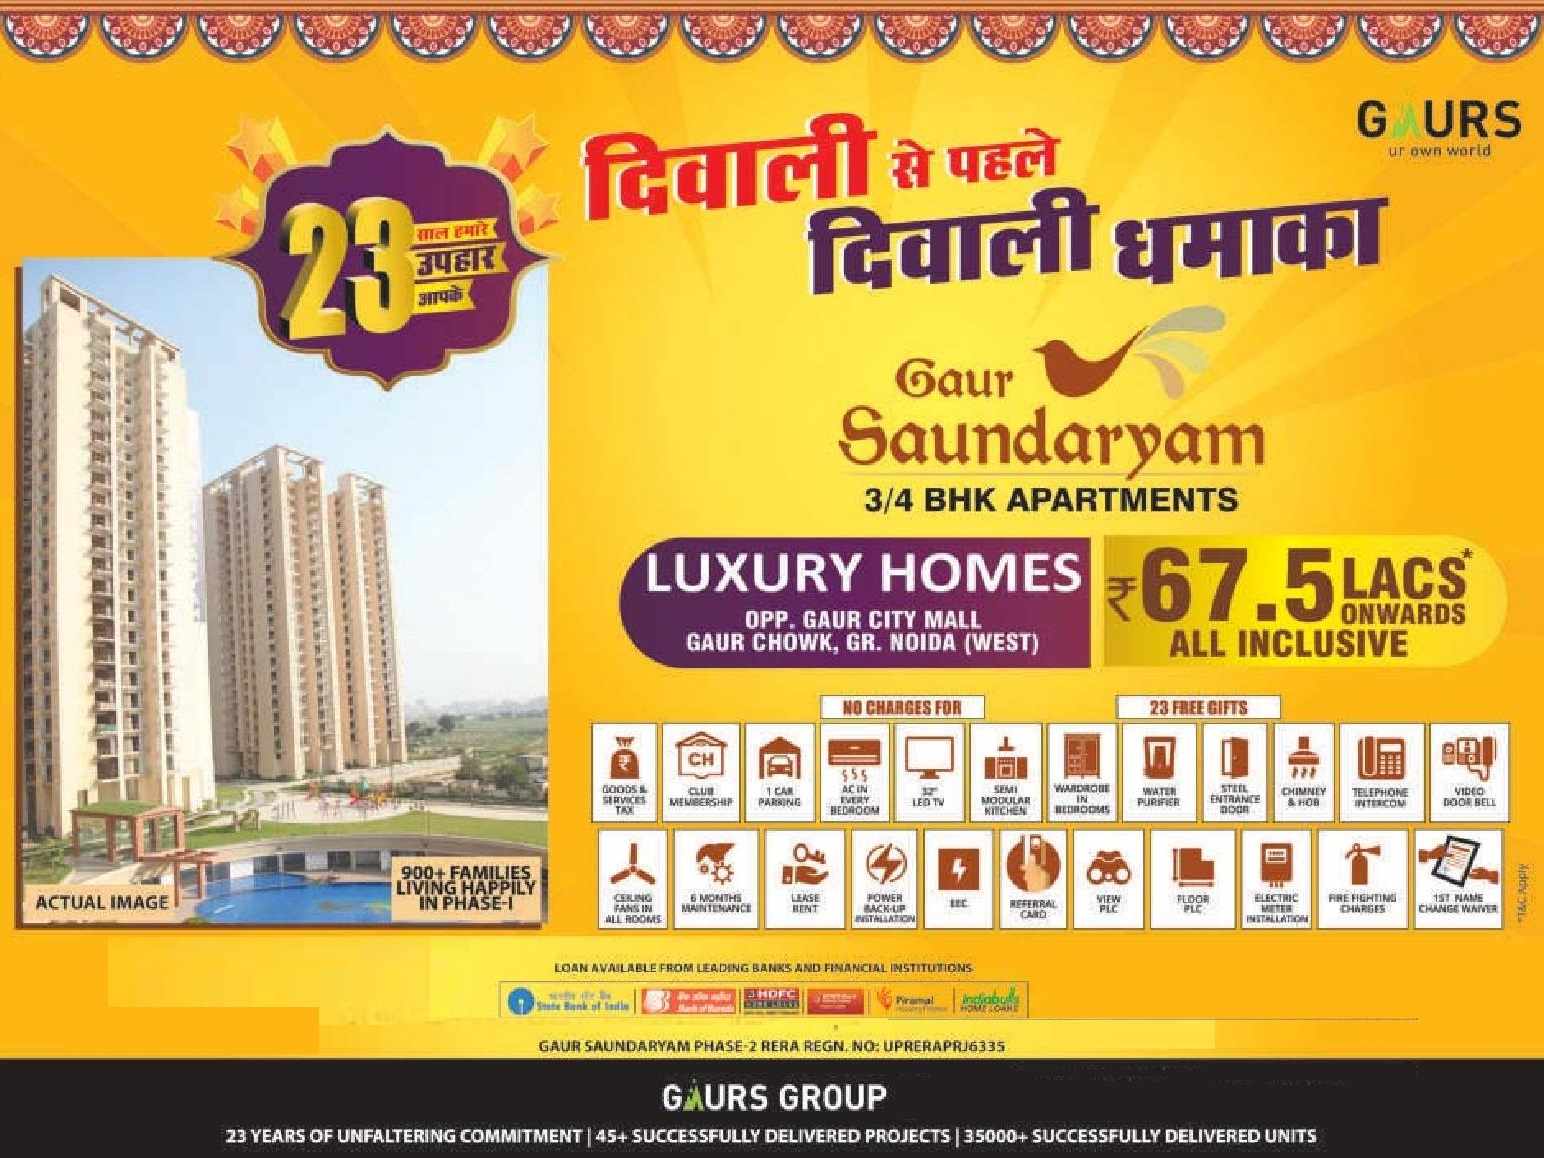 Book luxury homes starting @ Rs. 67.5 Lacs at Gaur Saundaryam in Greater Noida Update